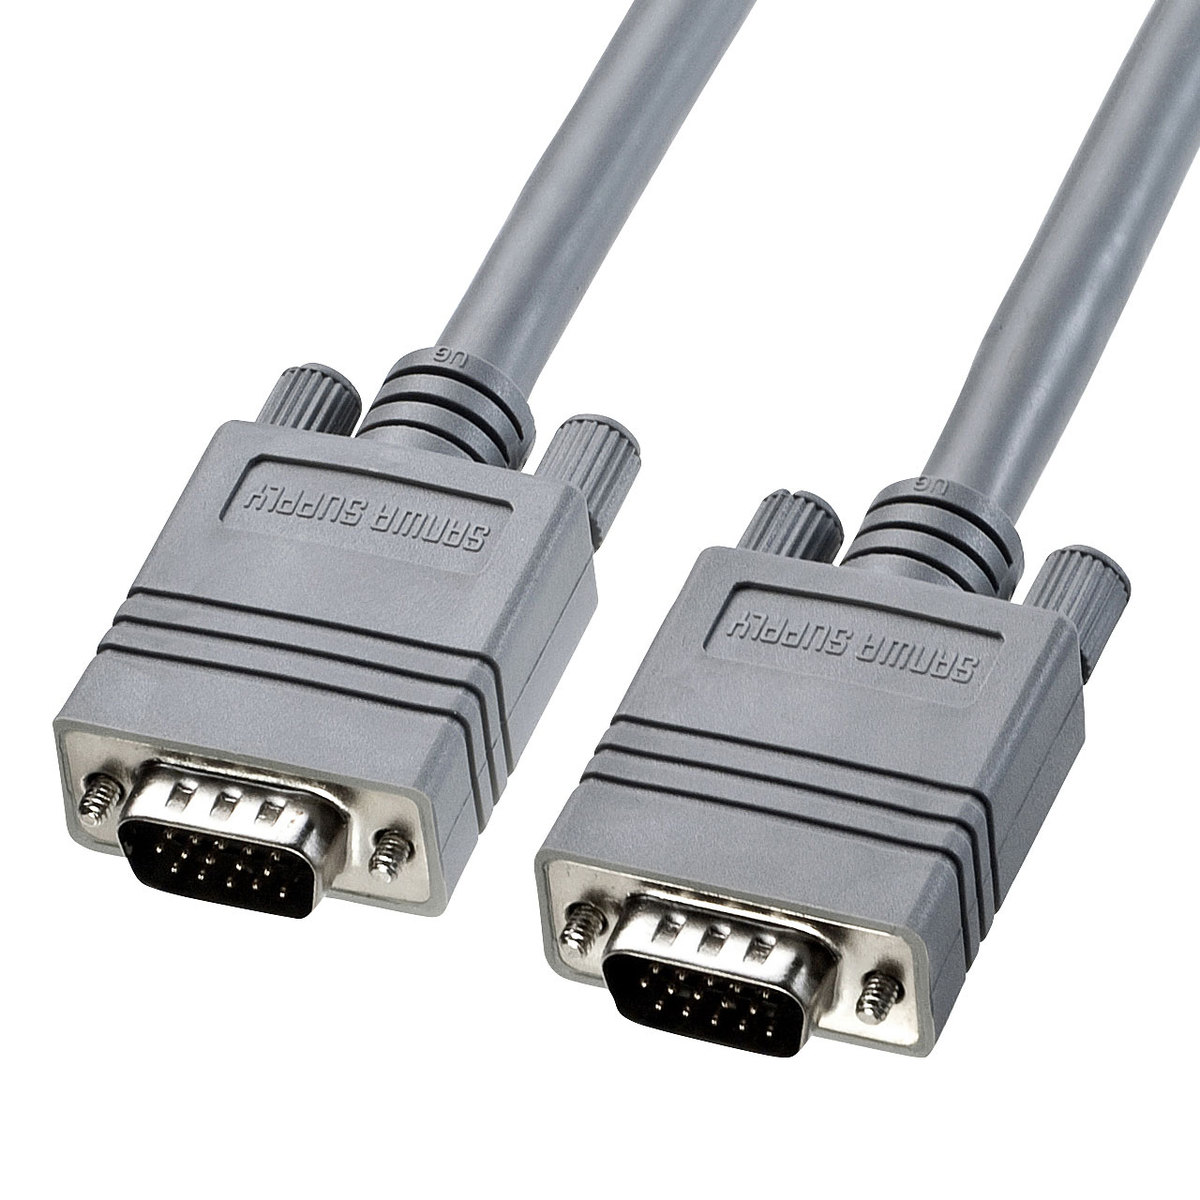 Display Cable (Compound Coaxial / Analog RGB), KB-CHD Series (KB-CHD1507K2) 